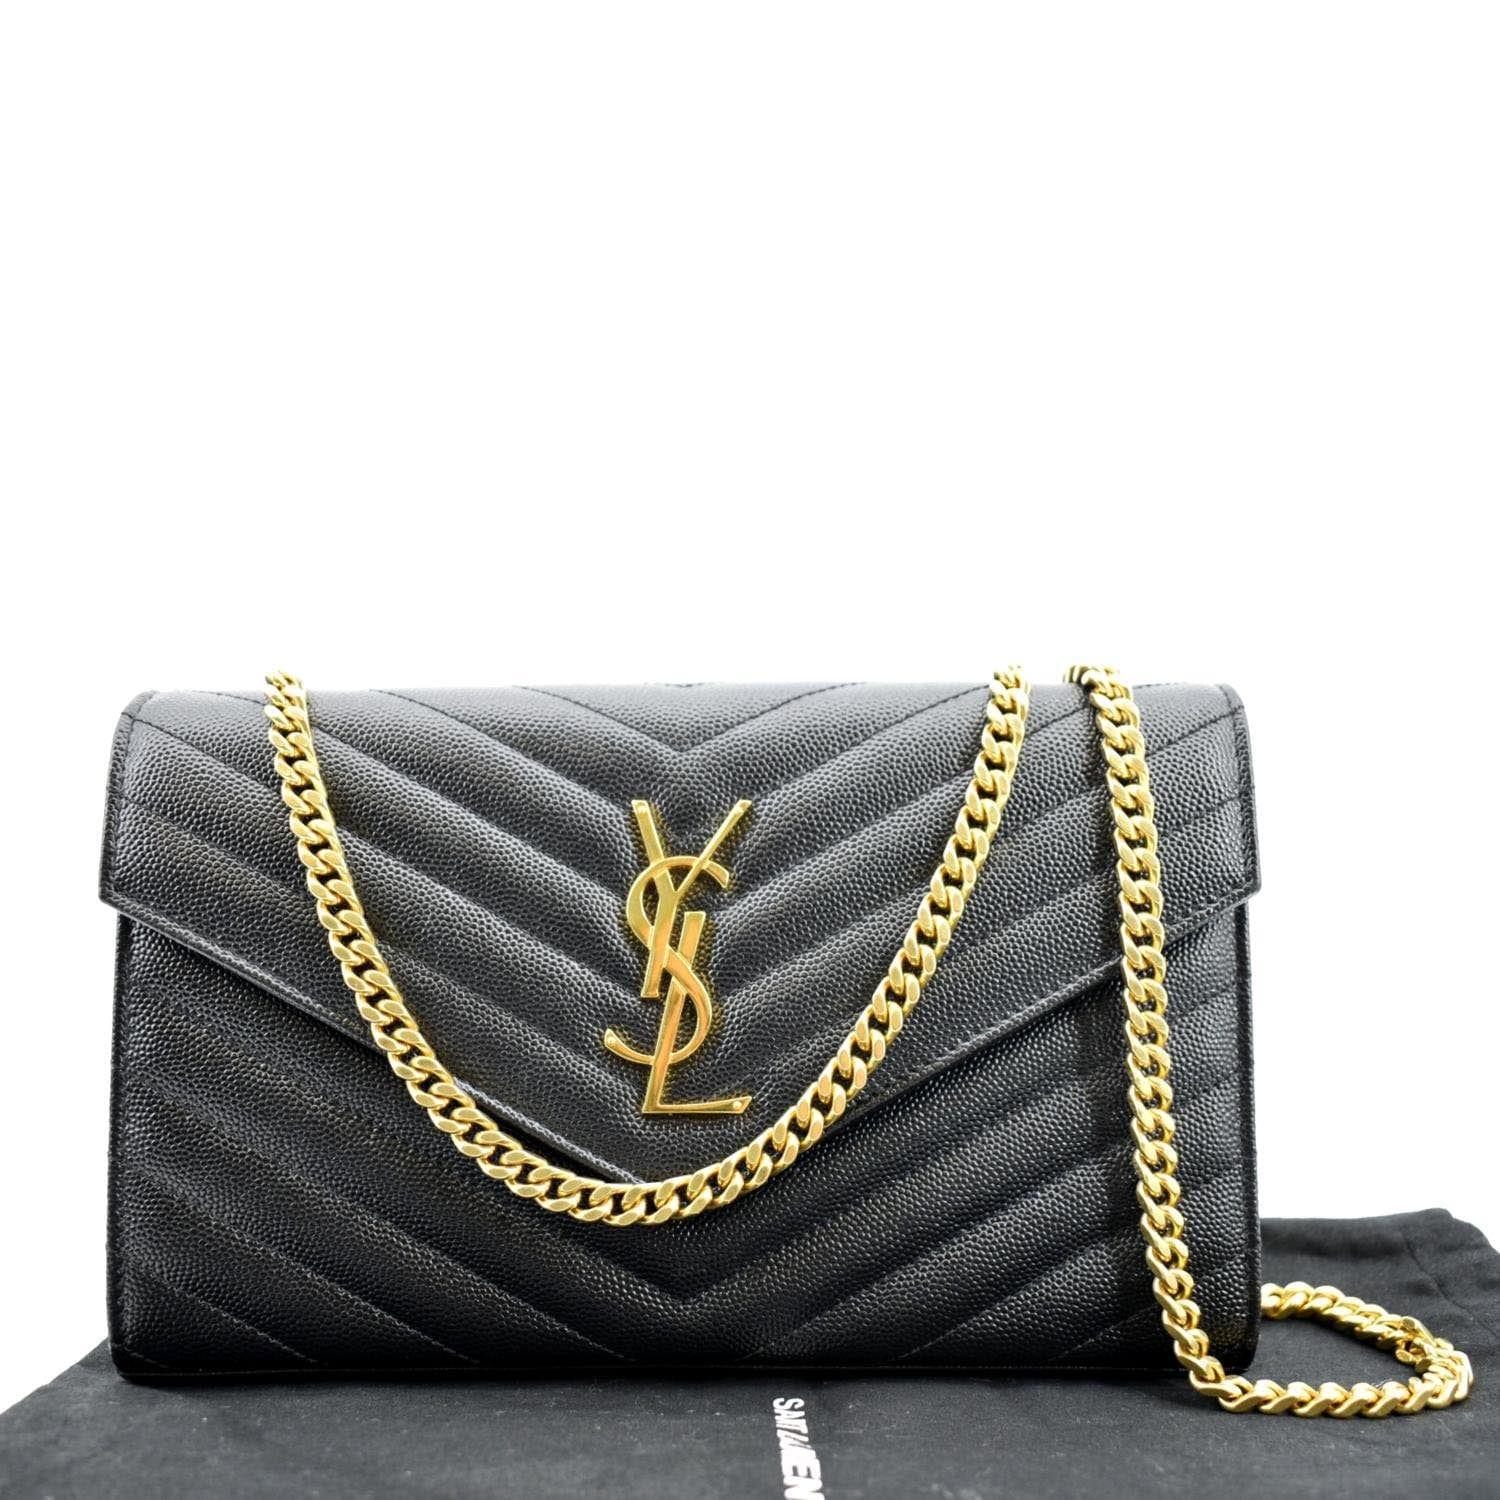 YVES SAINT LAURENT Envelope Medium Chain Leather Shoulder Bag Black